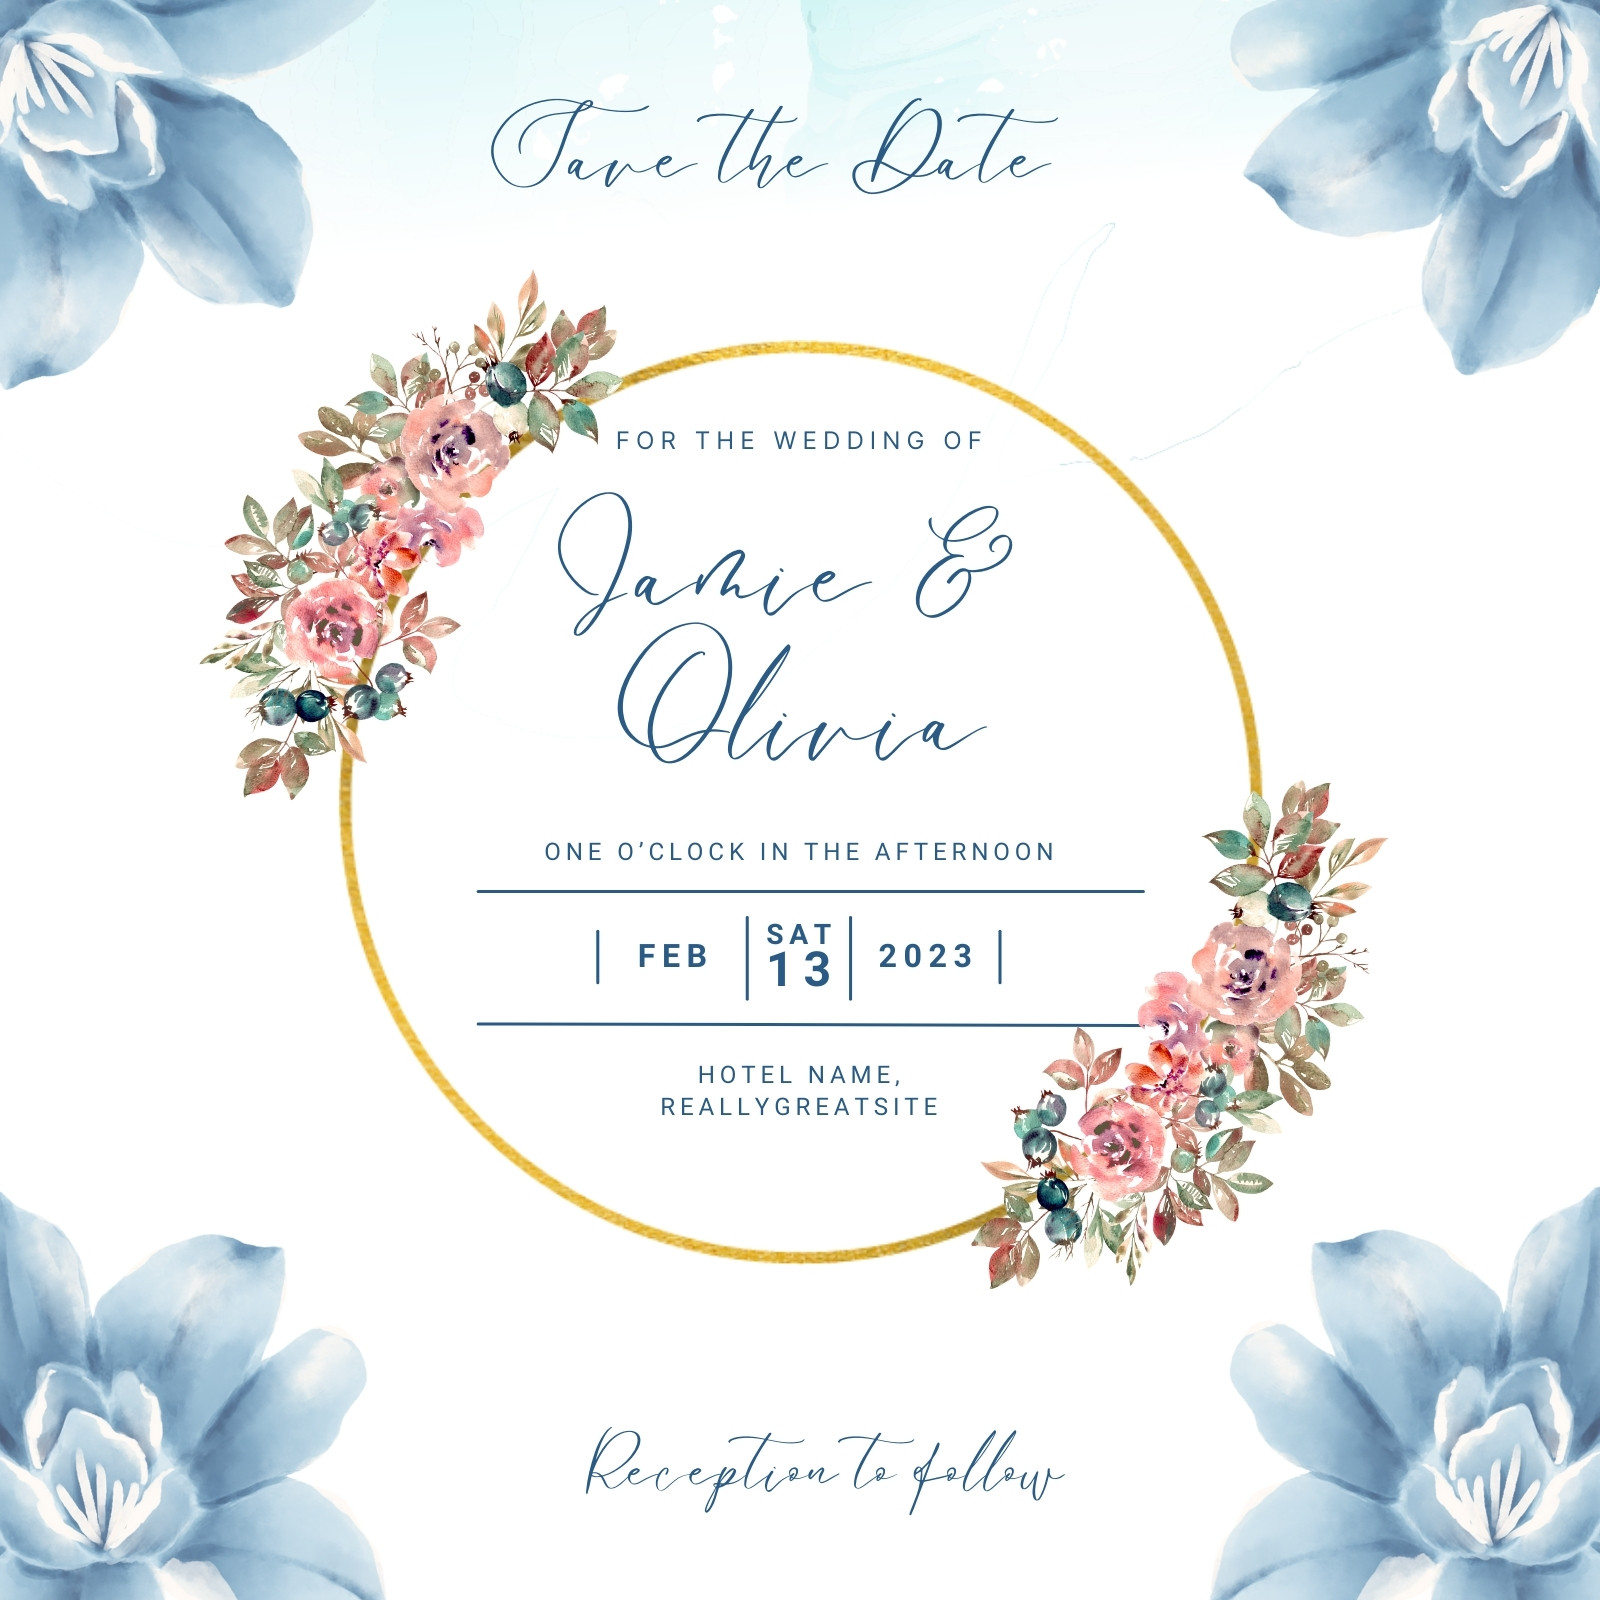 Free wedding reception invitation templates to edit | Canva